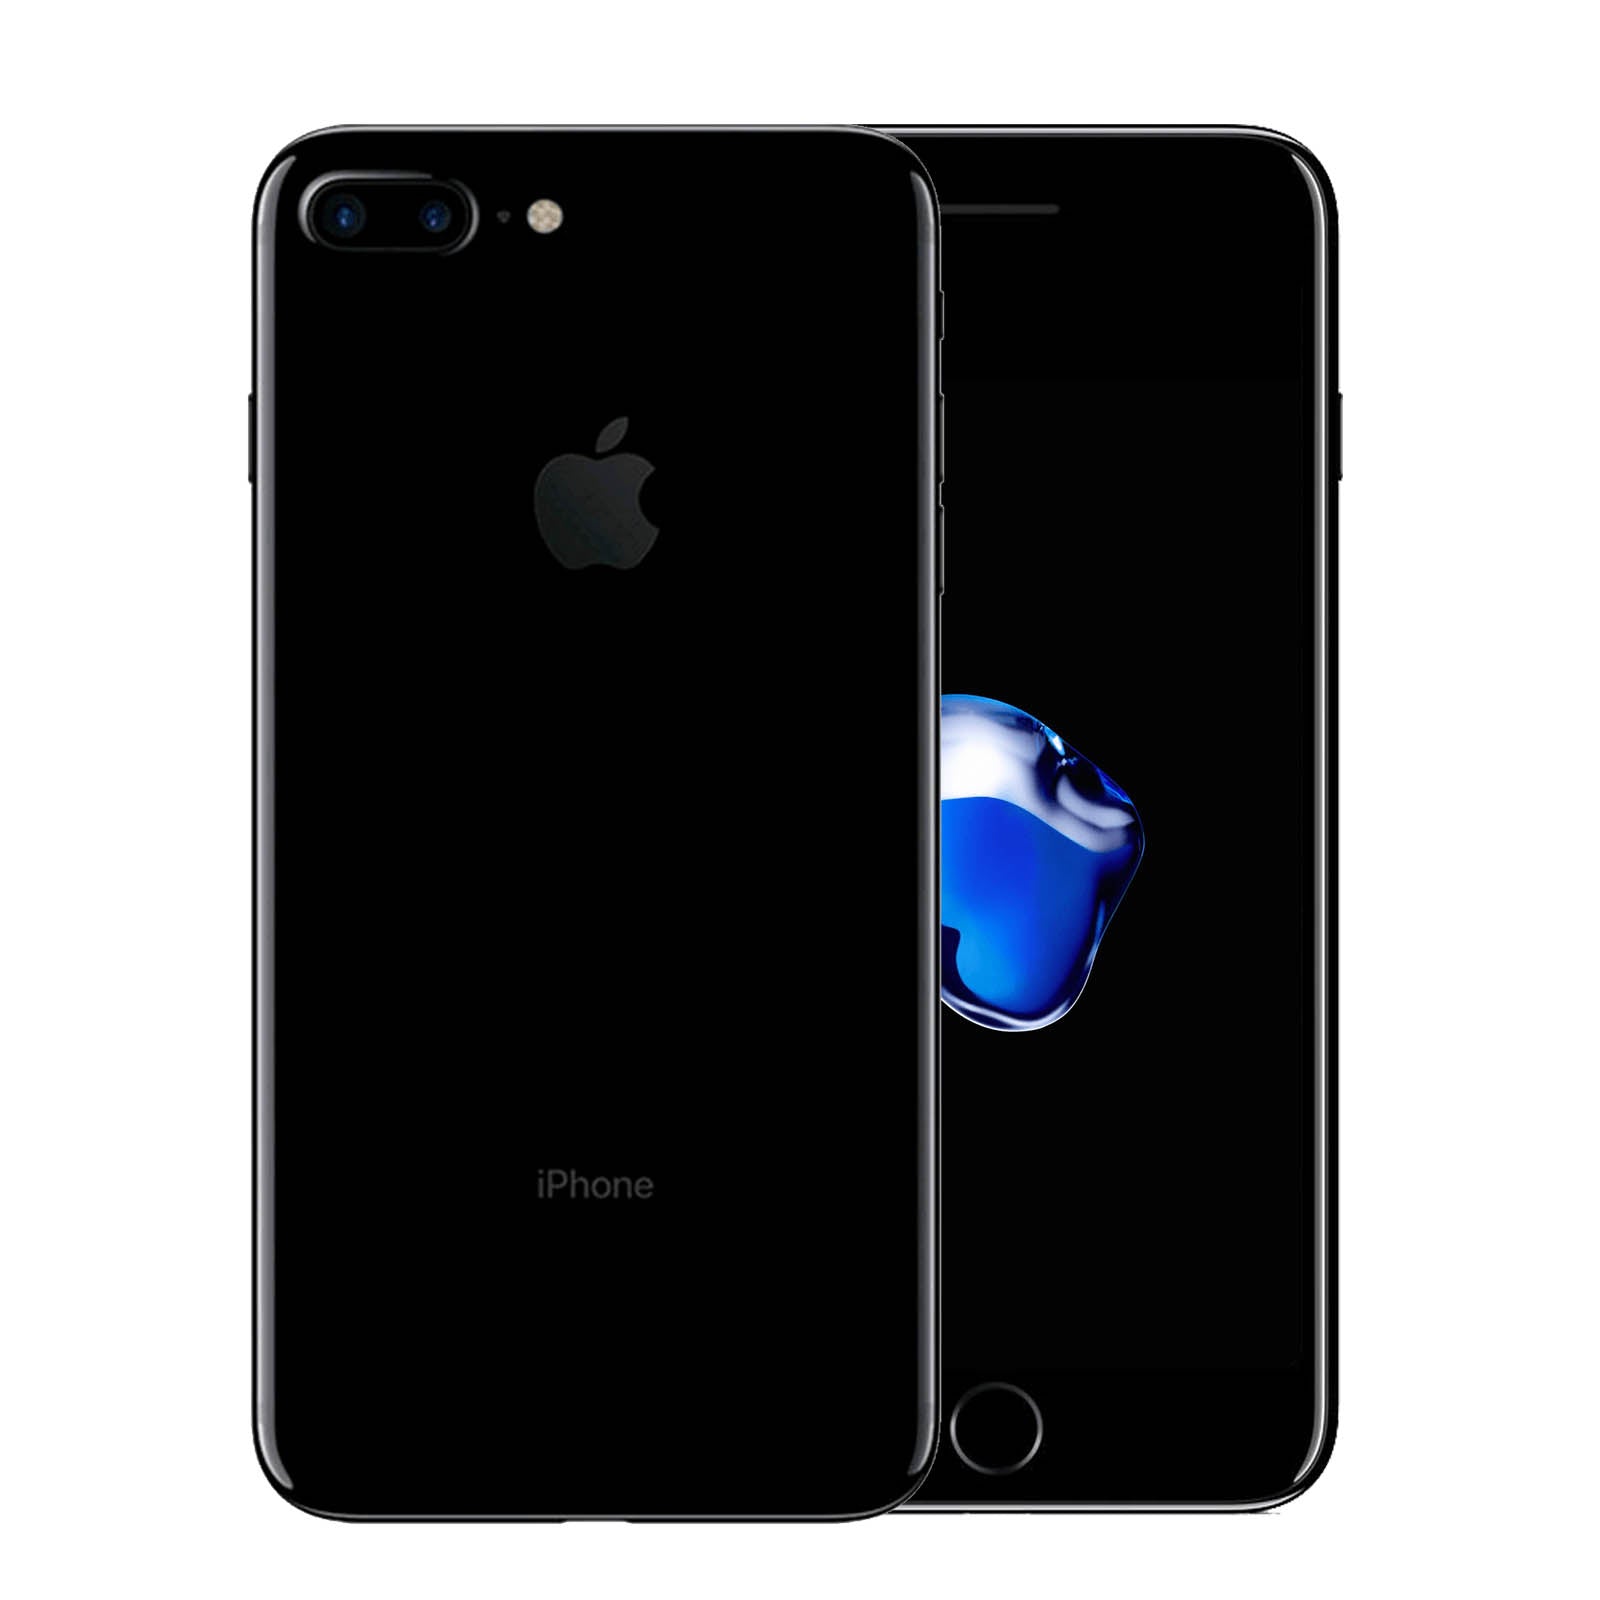 Apple iPhone 7 Plus 128GB Jet Black Very Good - Unlocked